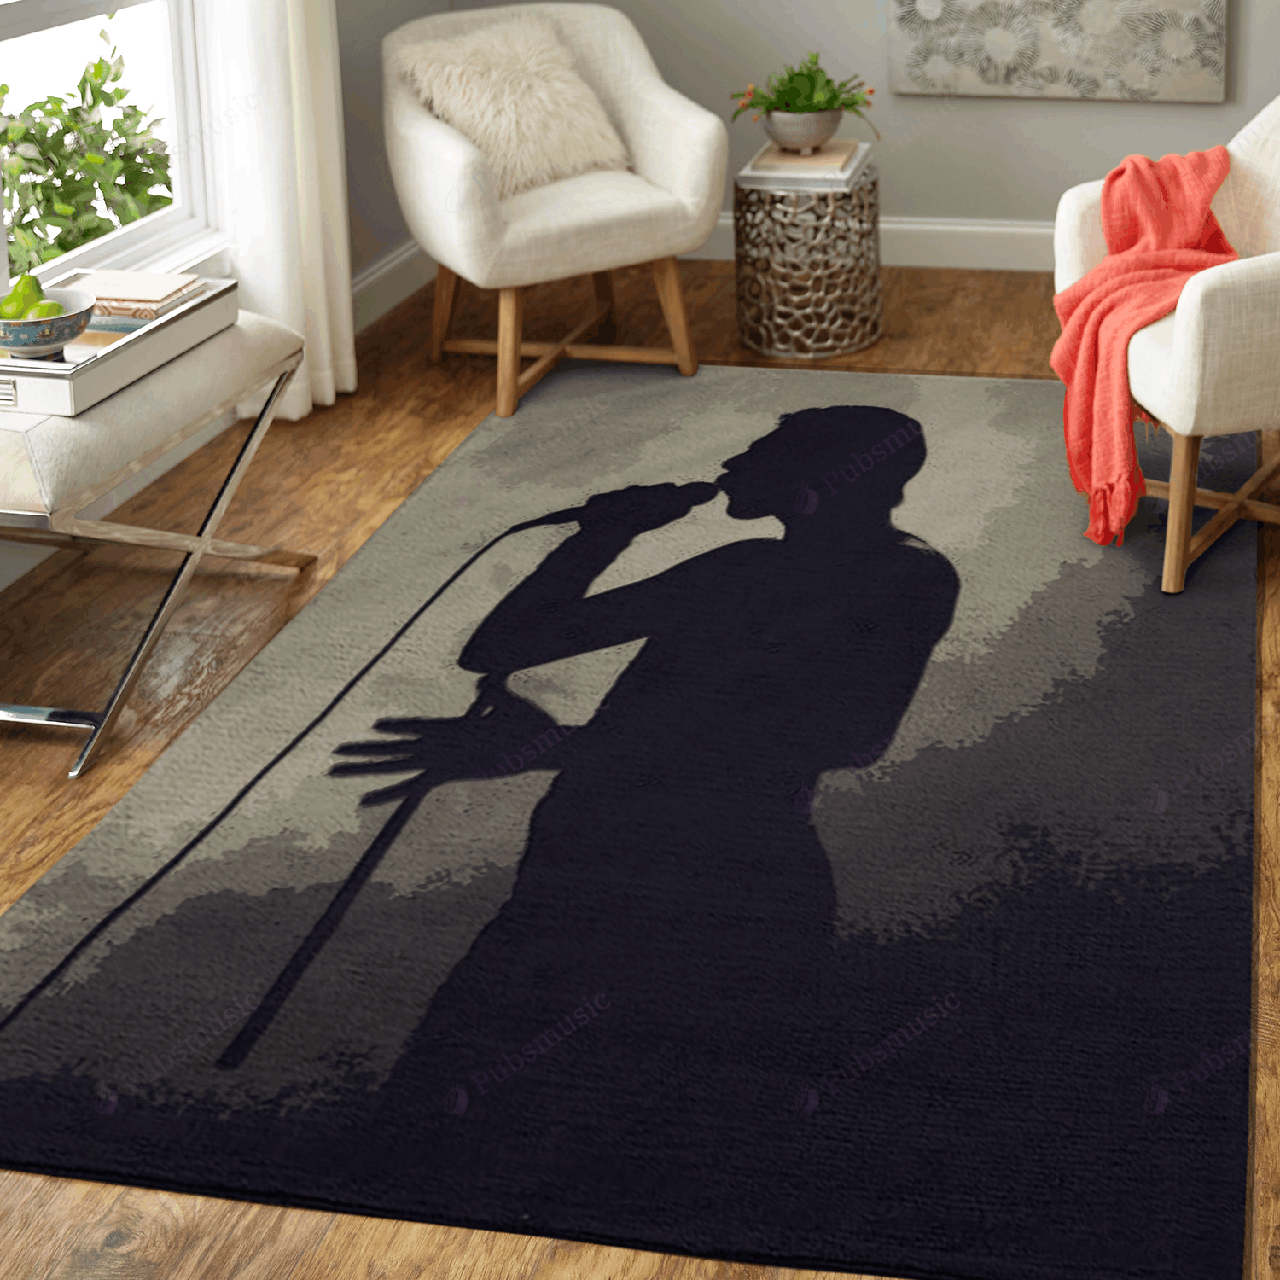 Freddie Mercury 12 – Music Artist Art For Fans Area Rug Carpet